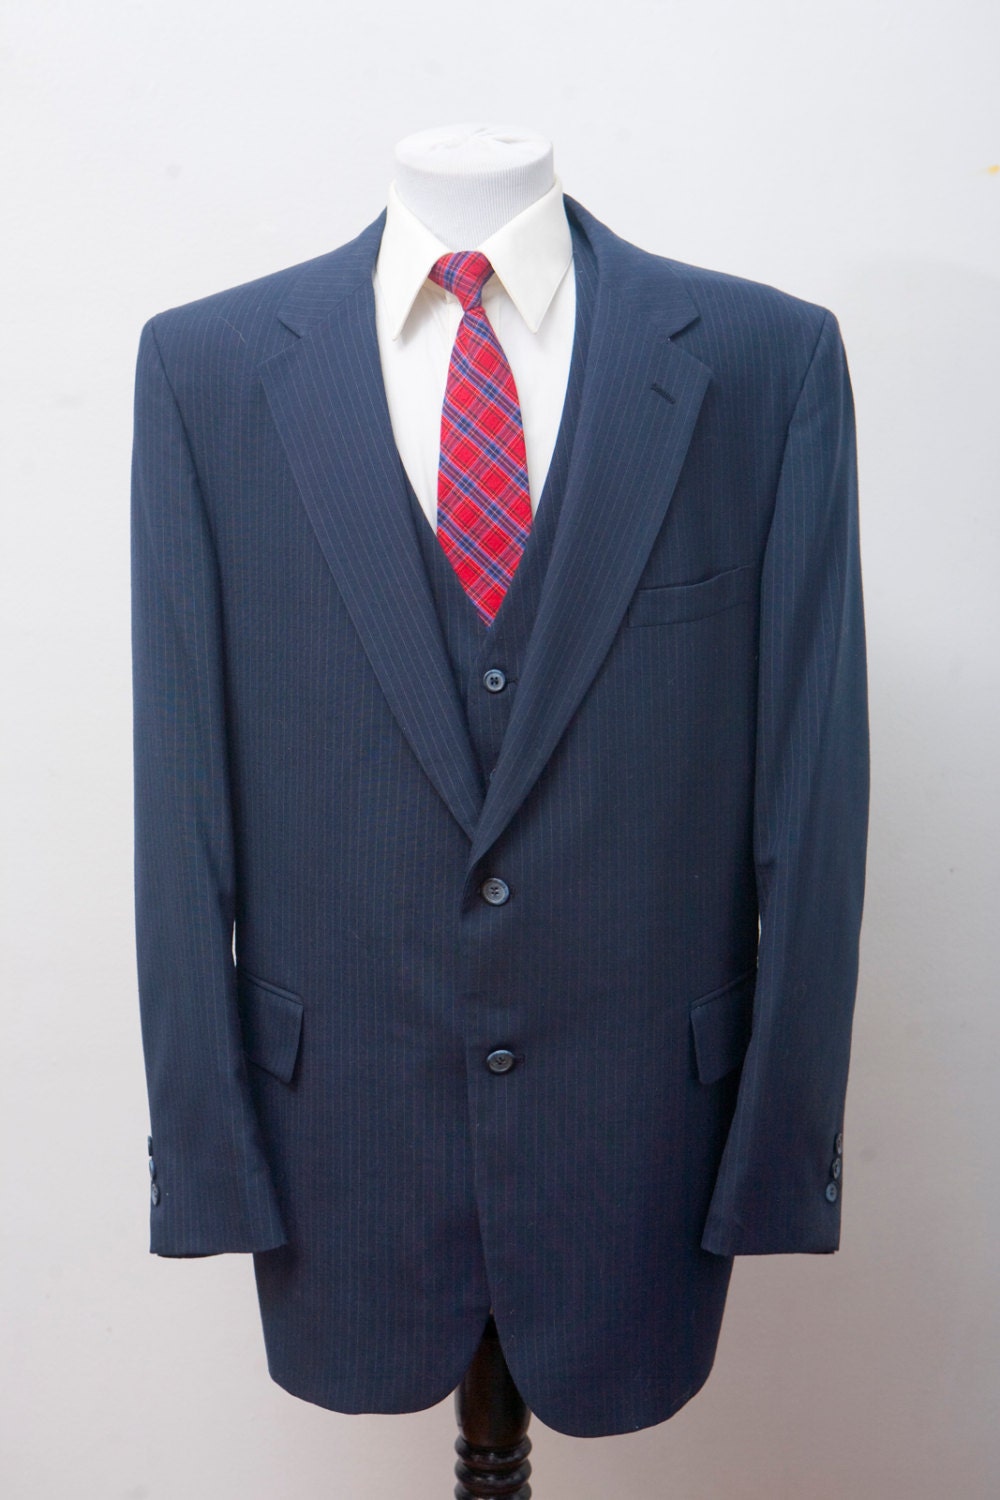 Men's Suit Vest and Jacket / Vintage Blazer by Stafford / - Etsy